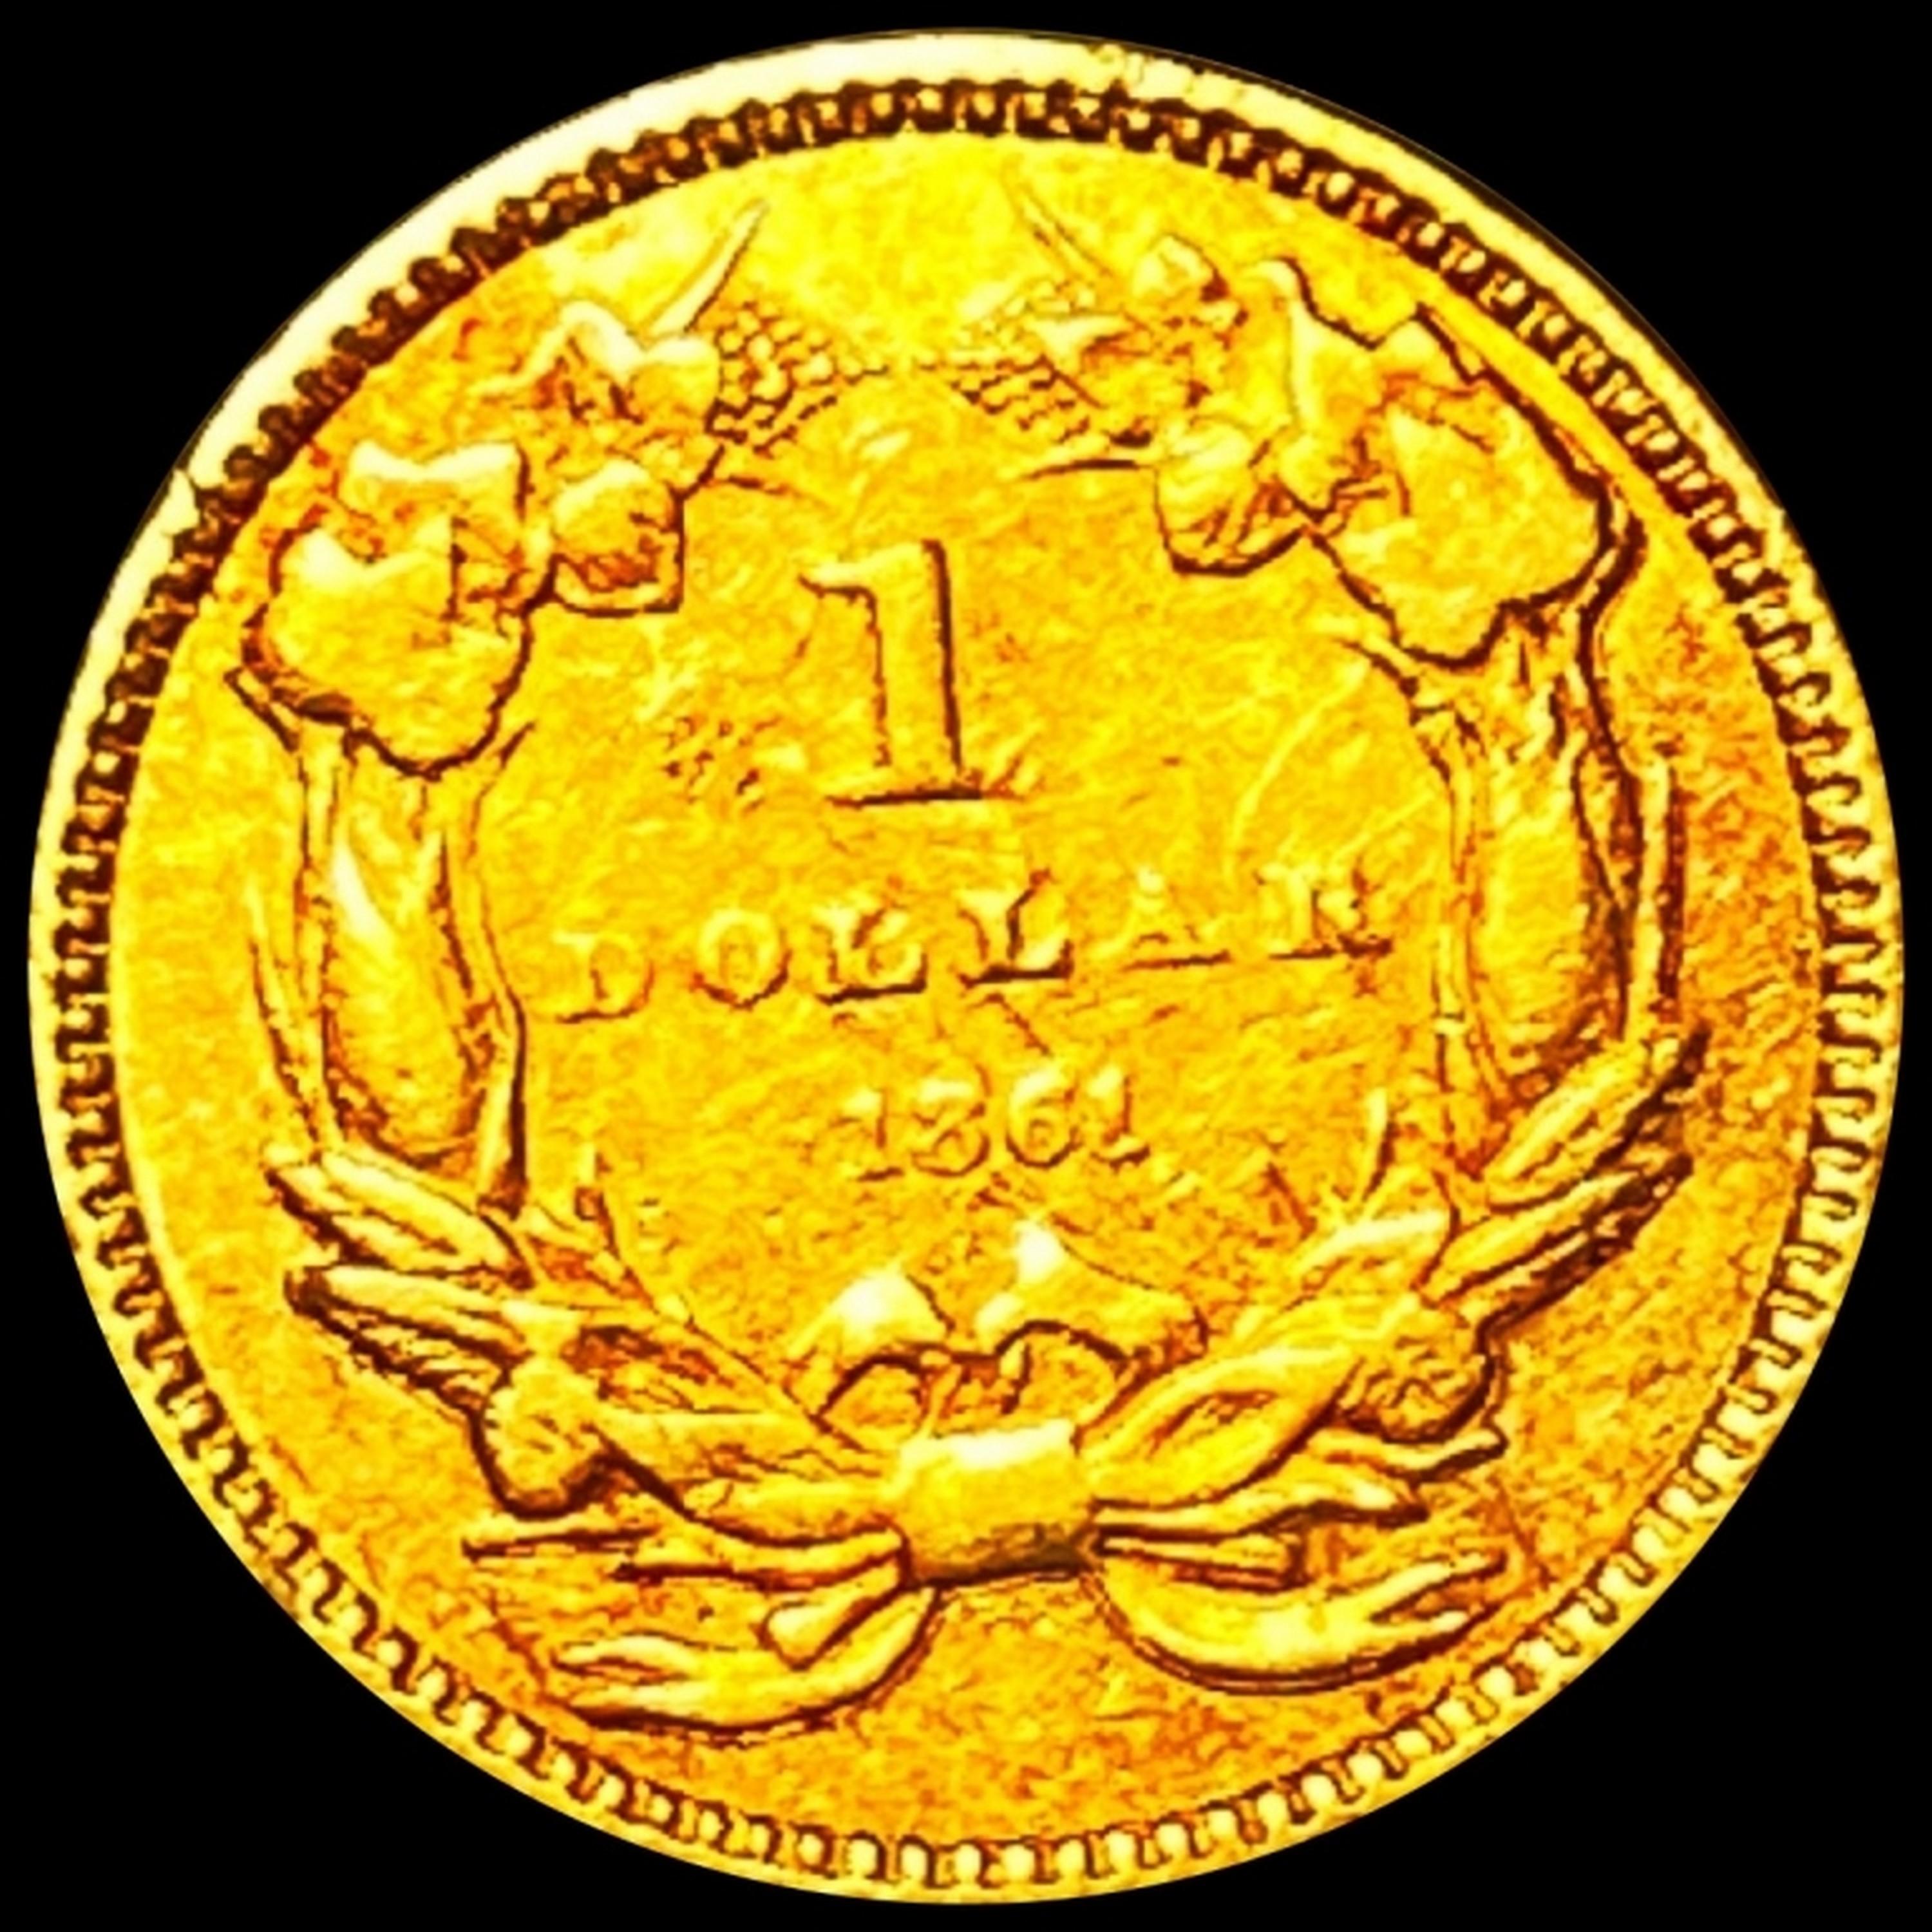 1861 Rare Gold Dollar UNCIRCULATED